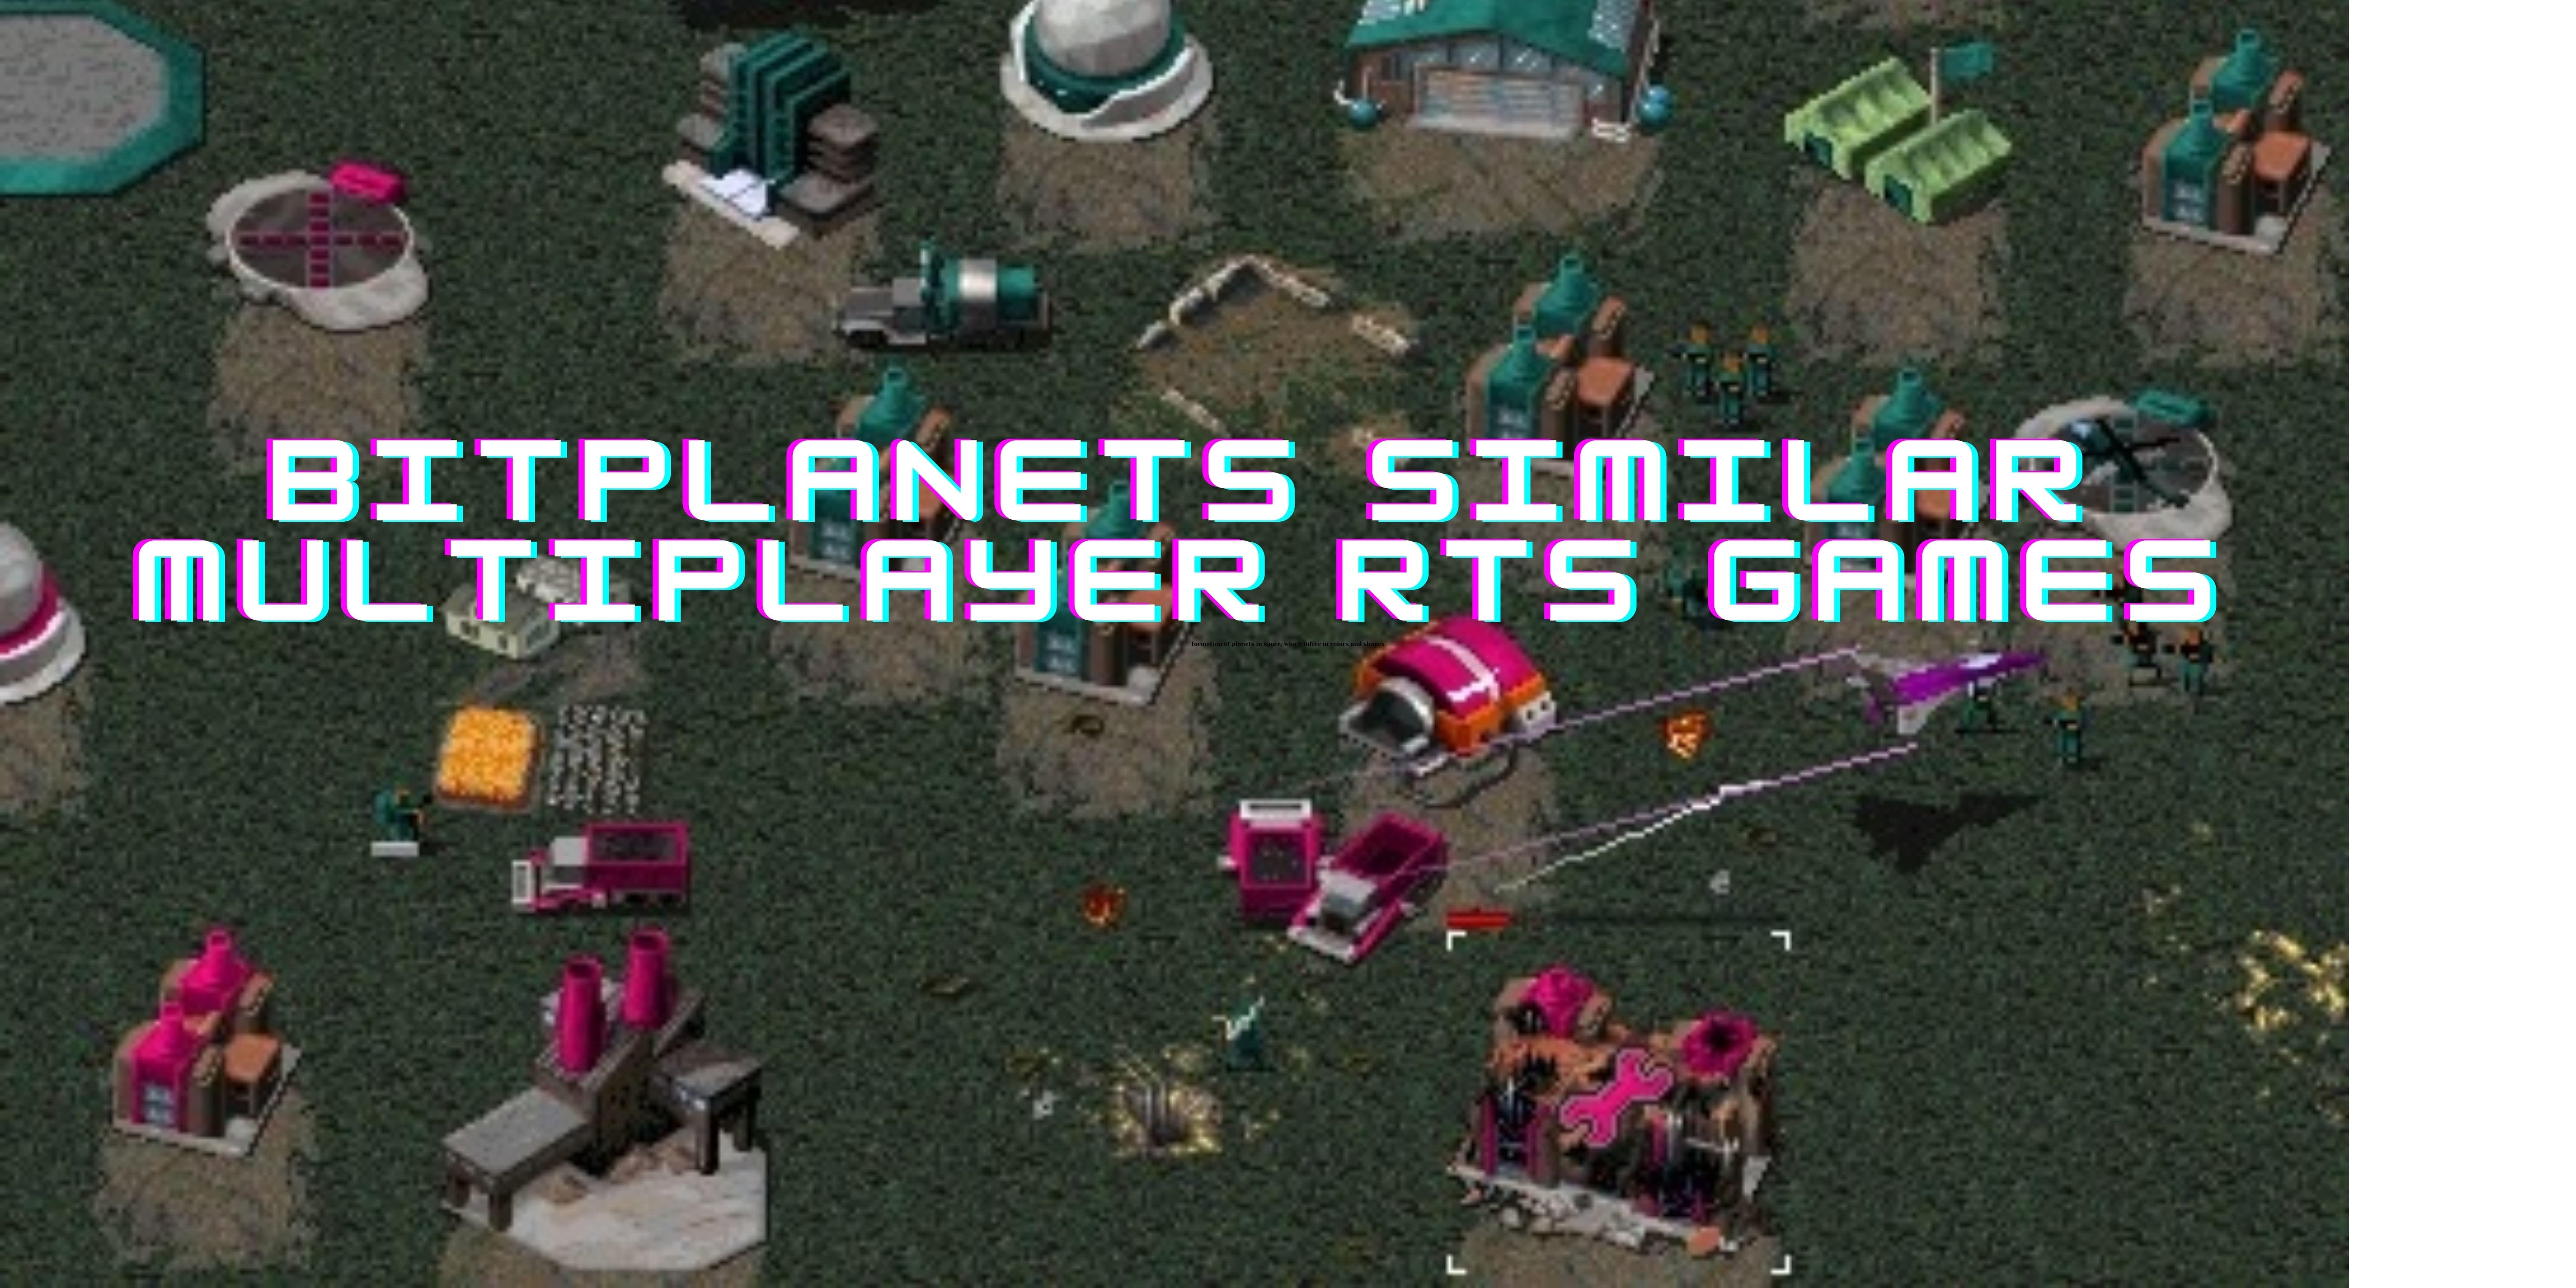 Bitplanets Similar Multiplayer RTS Games